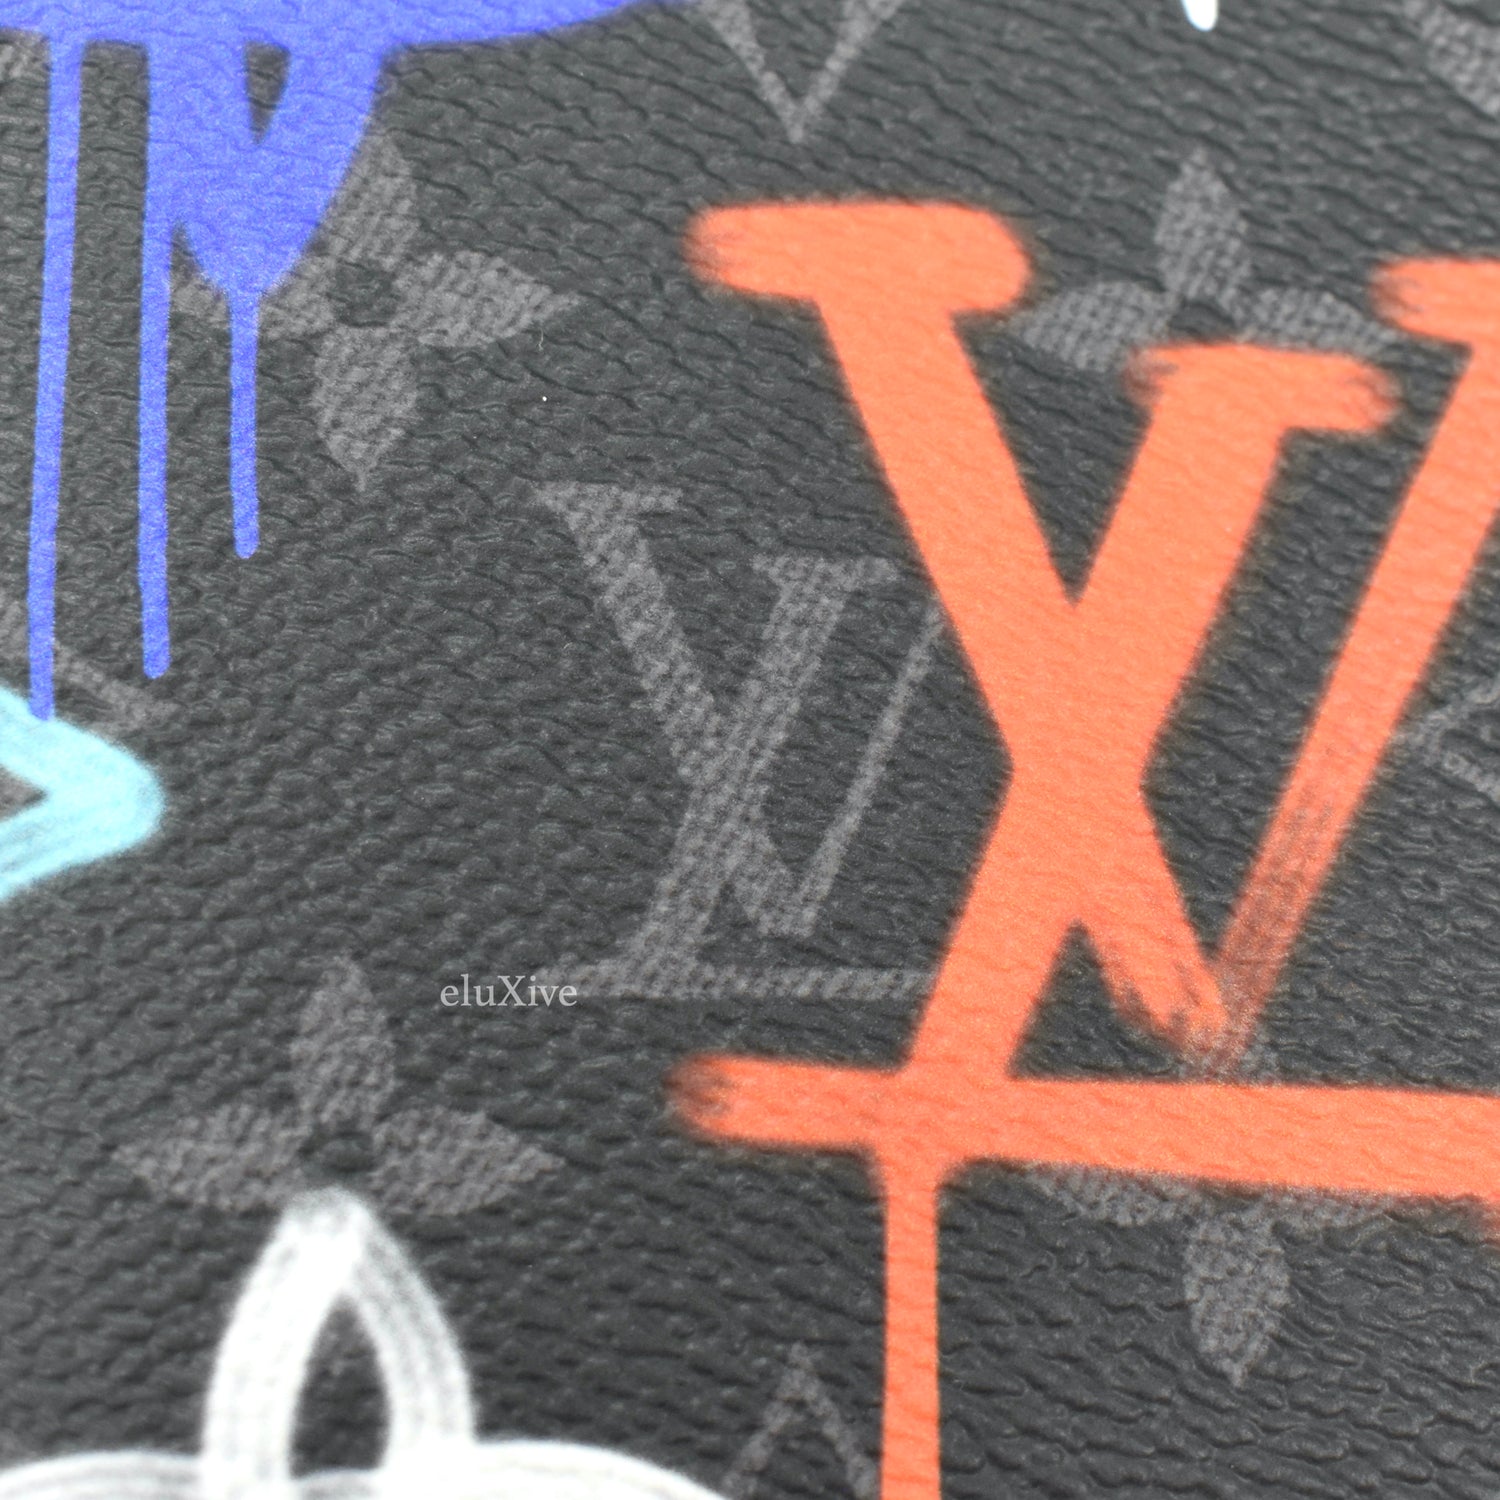 Louis Vuitton Multiple Wallet in LV Graffiti Monogram Eclipse Canvas M81847  Orange 2023